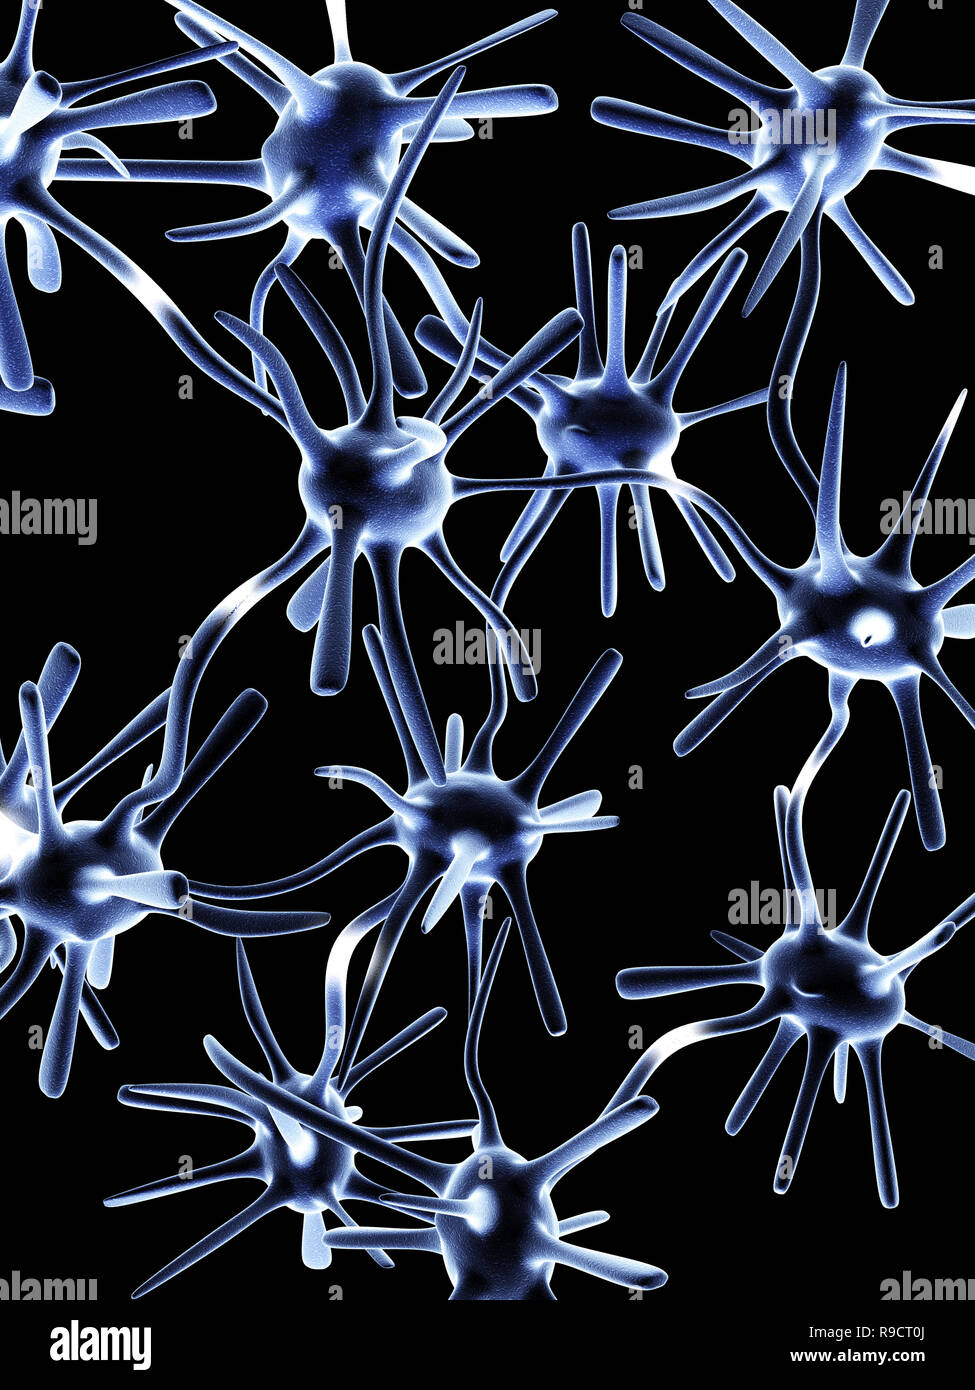 Impulses of neurons. On black background Stock Photo